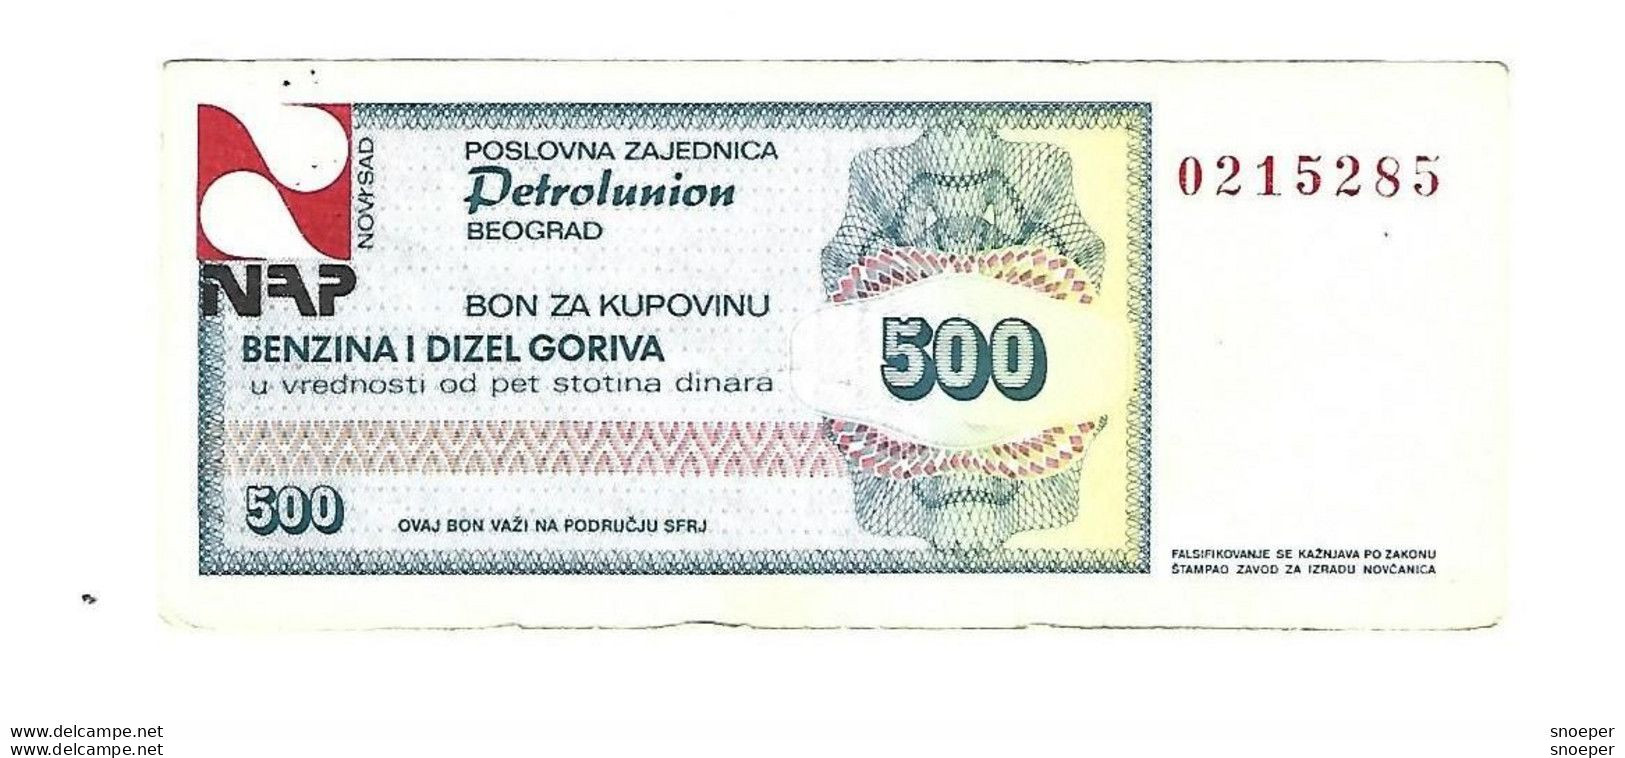 Serbia Beograd Petrolunion  Bon 500 Dinara  Benzin /diezel  S62 - Serbie